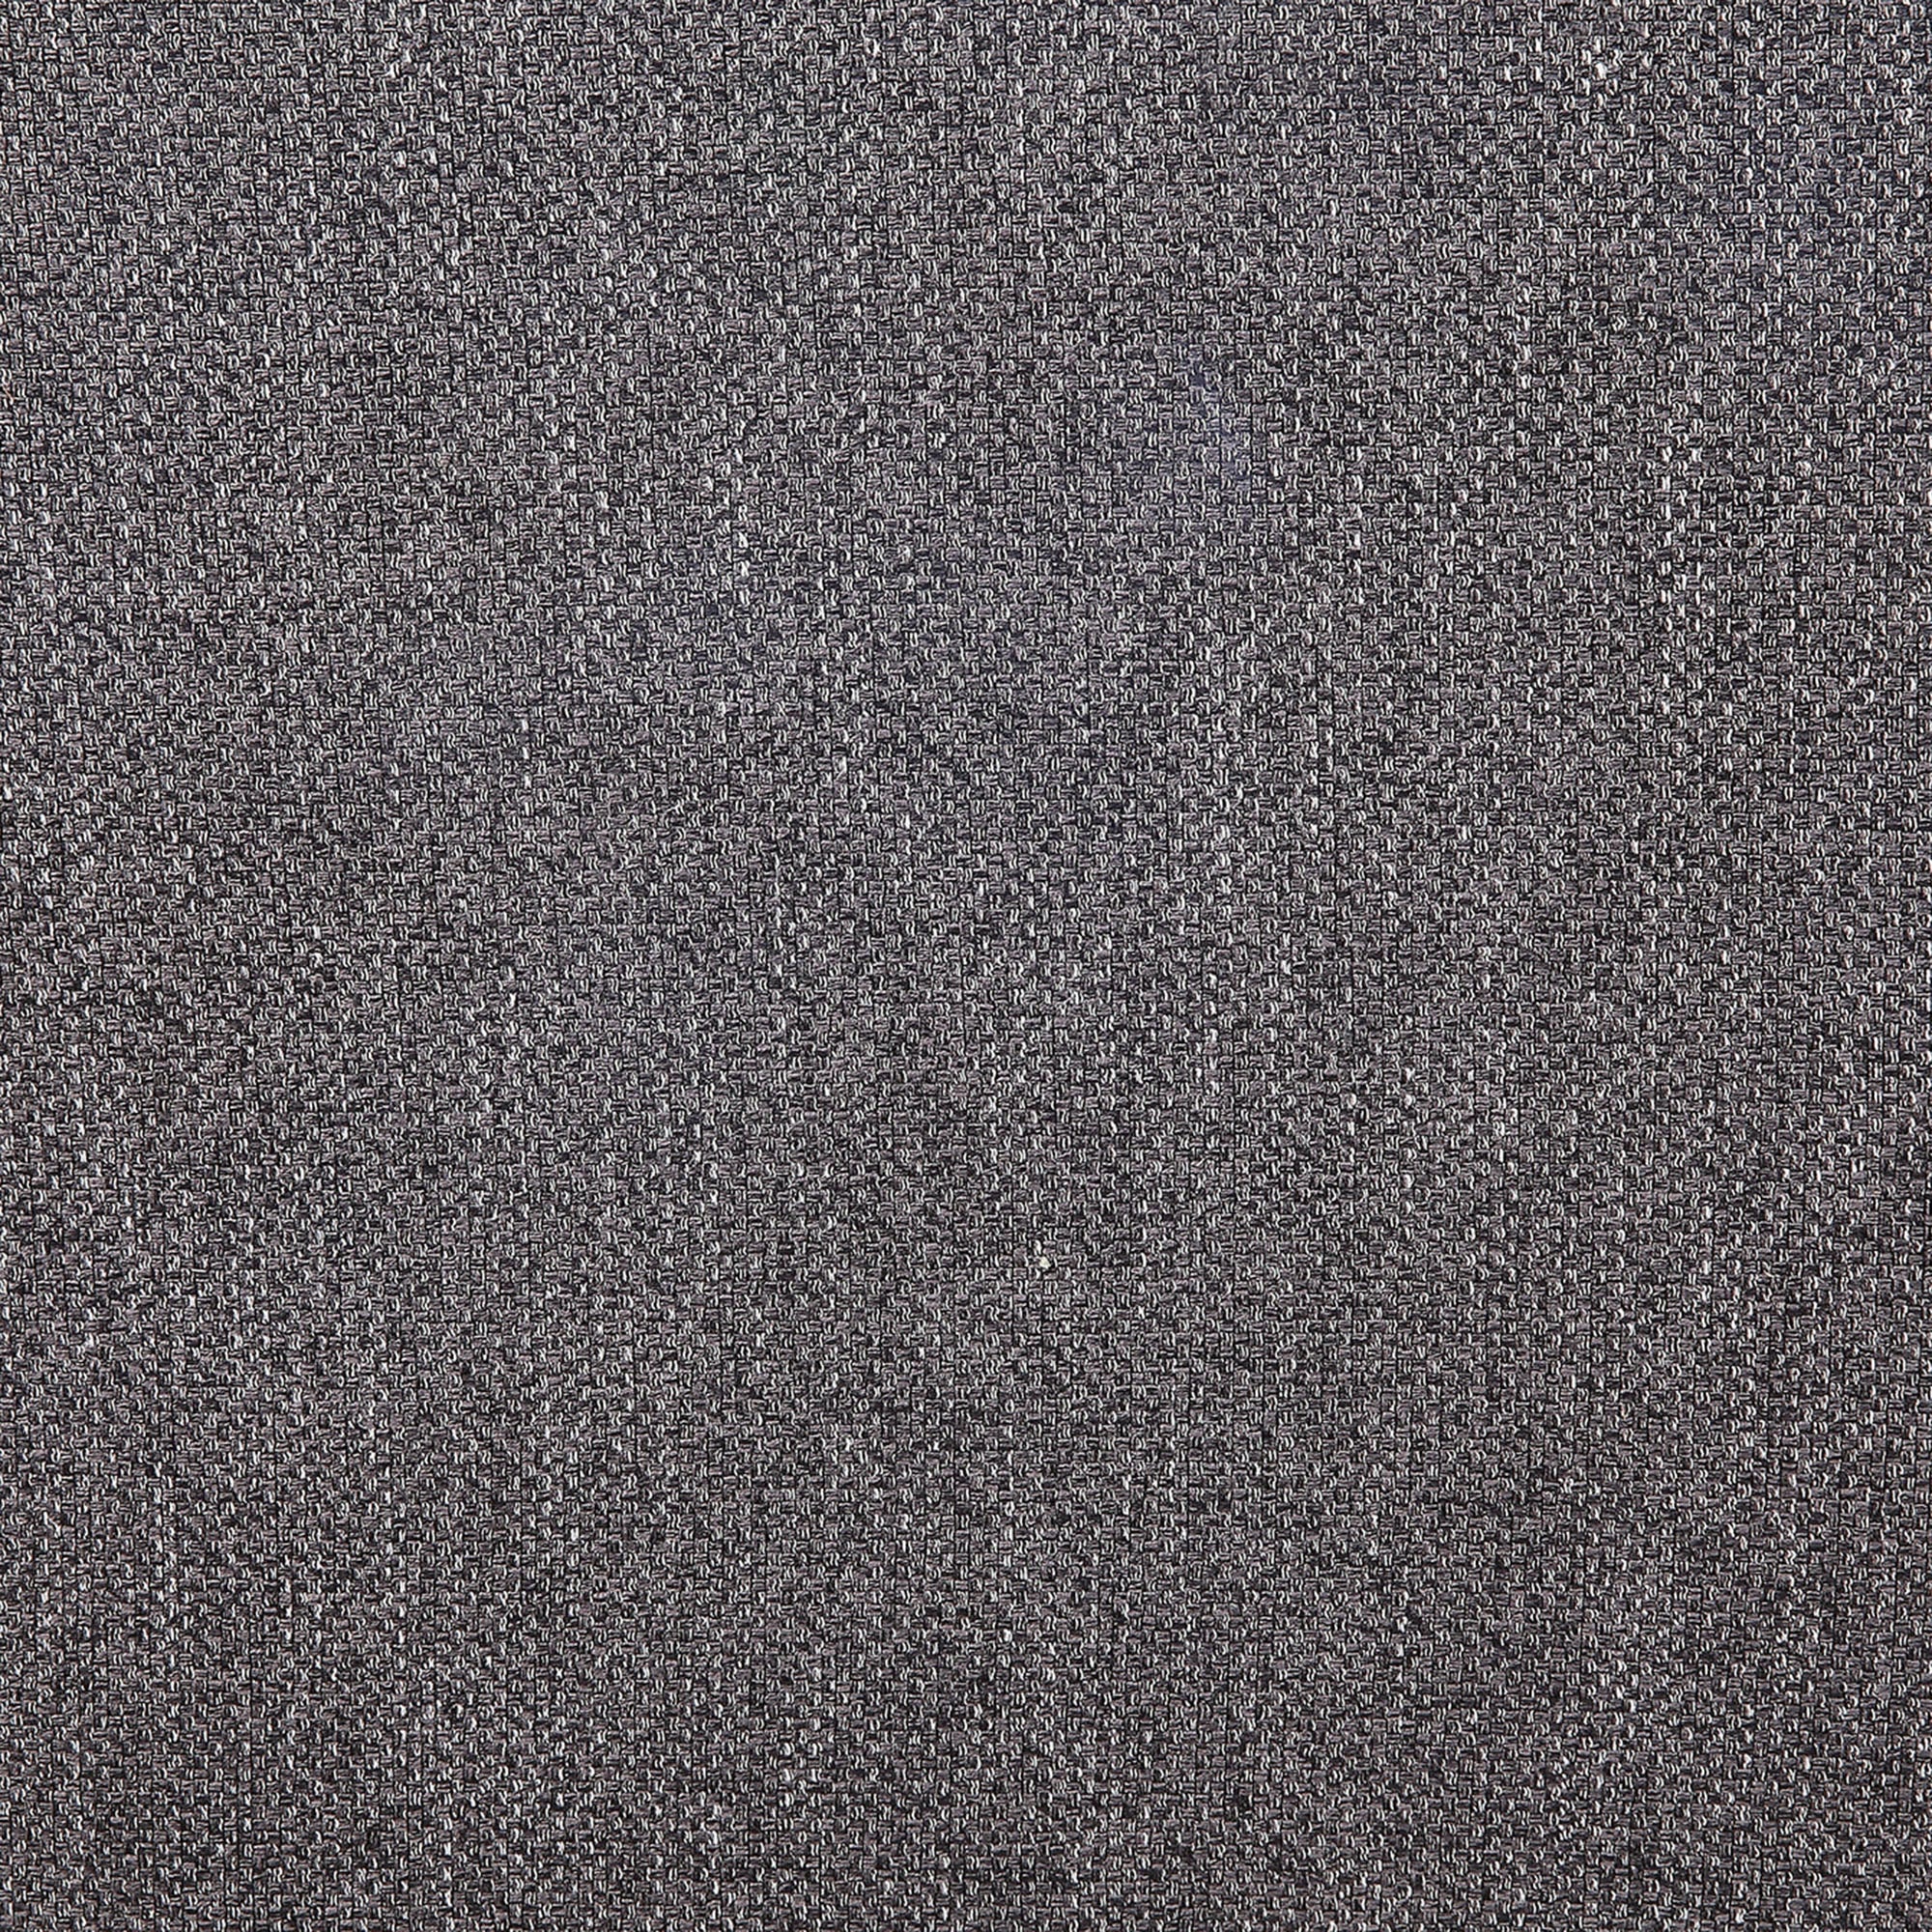 Rennane Fabric Sectional Sofa W/Bed & Storage, 93.5 - Charcoal